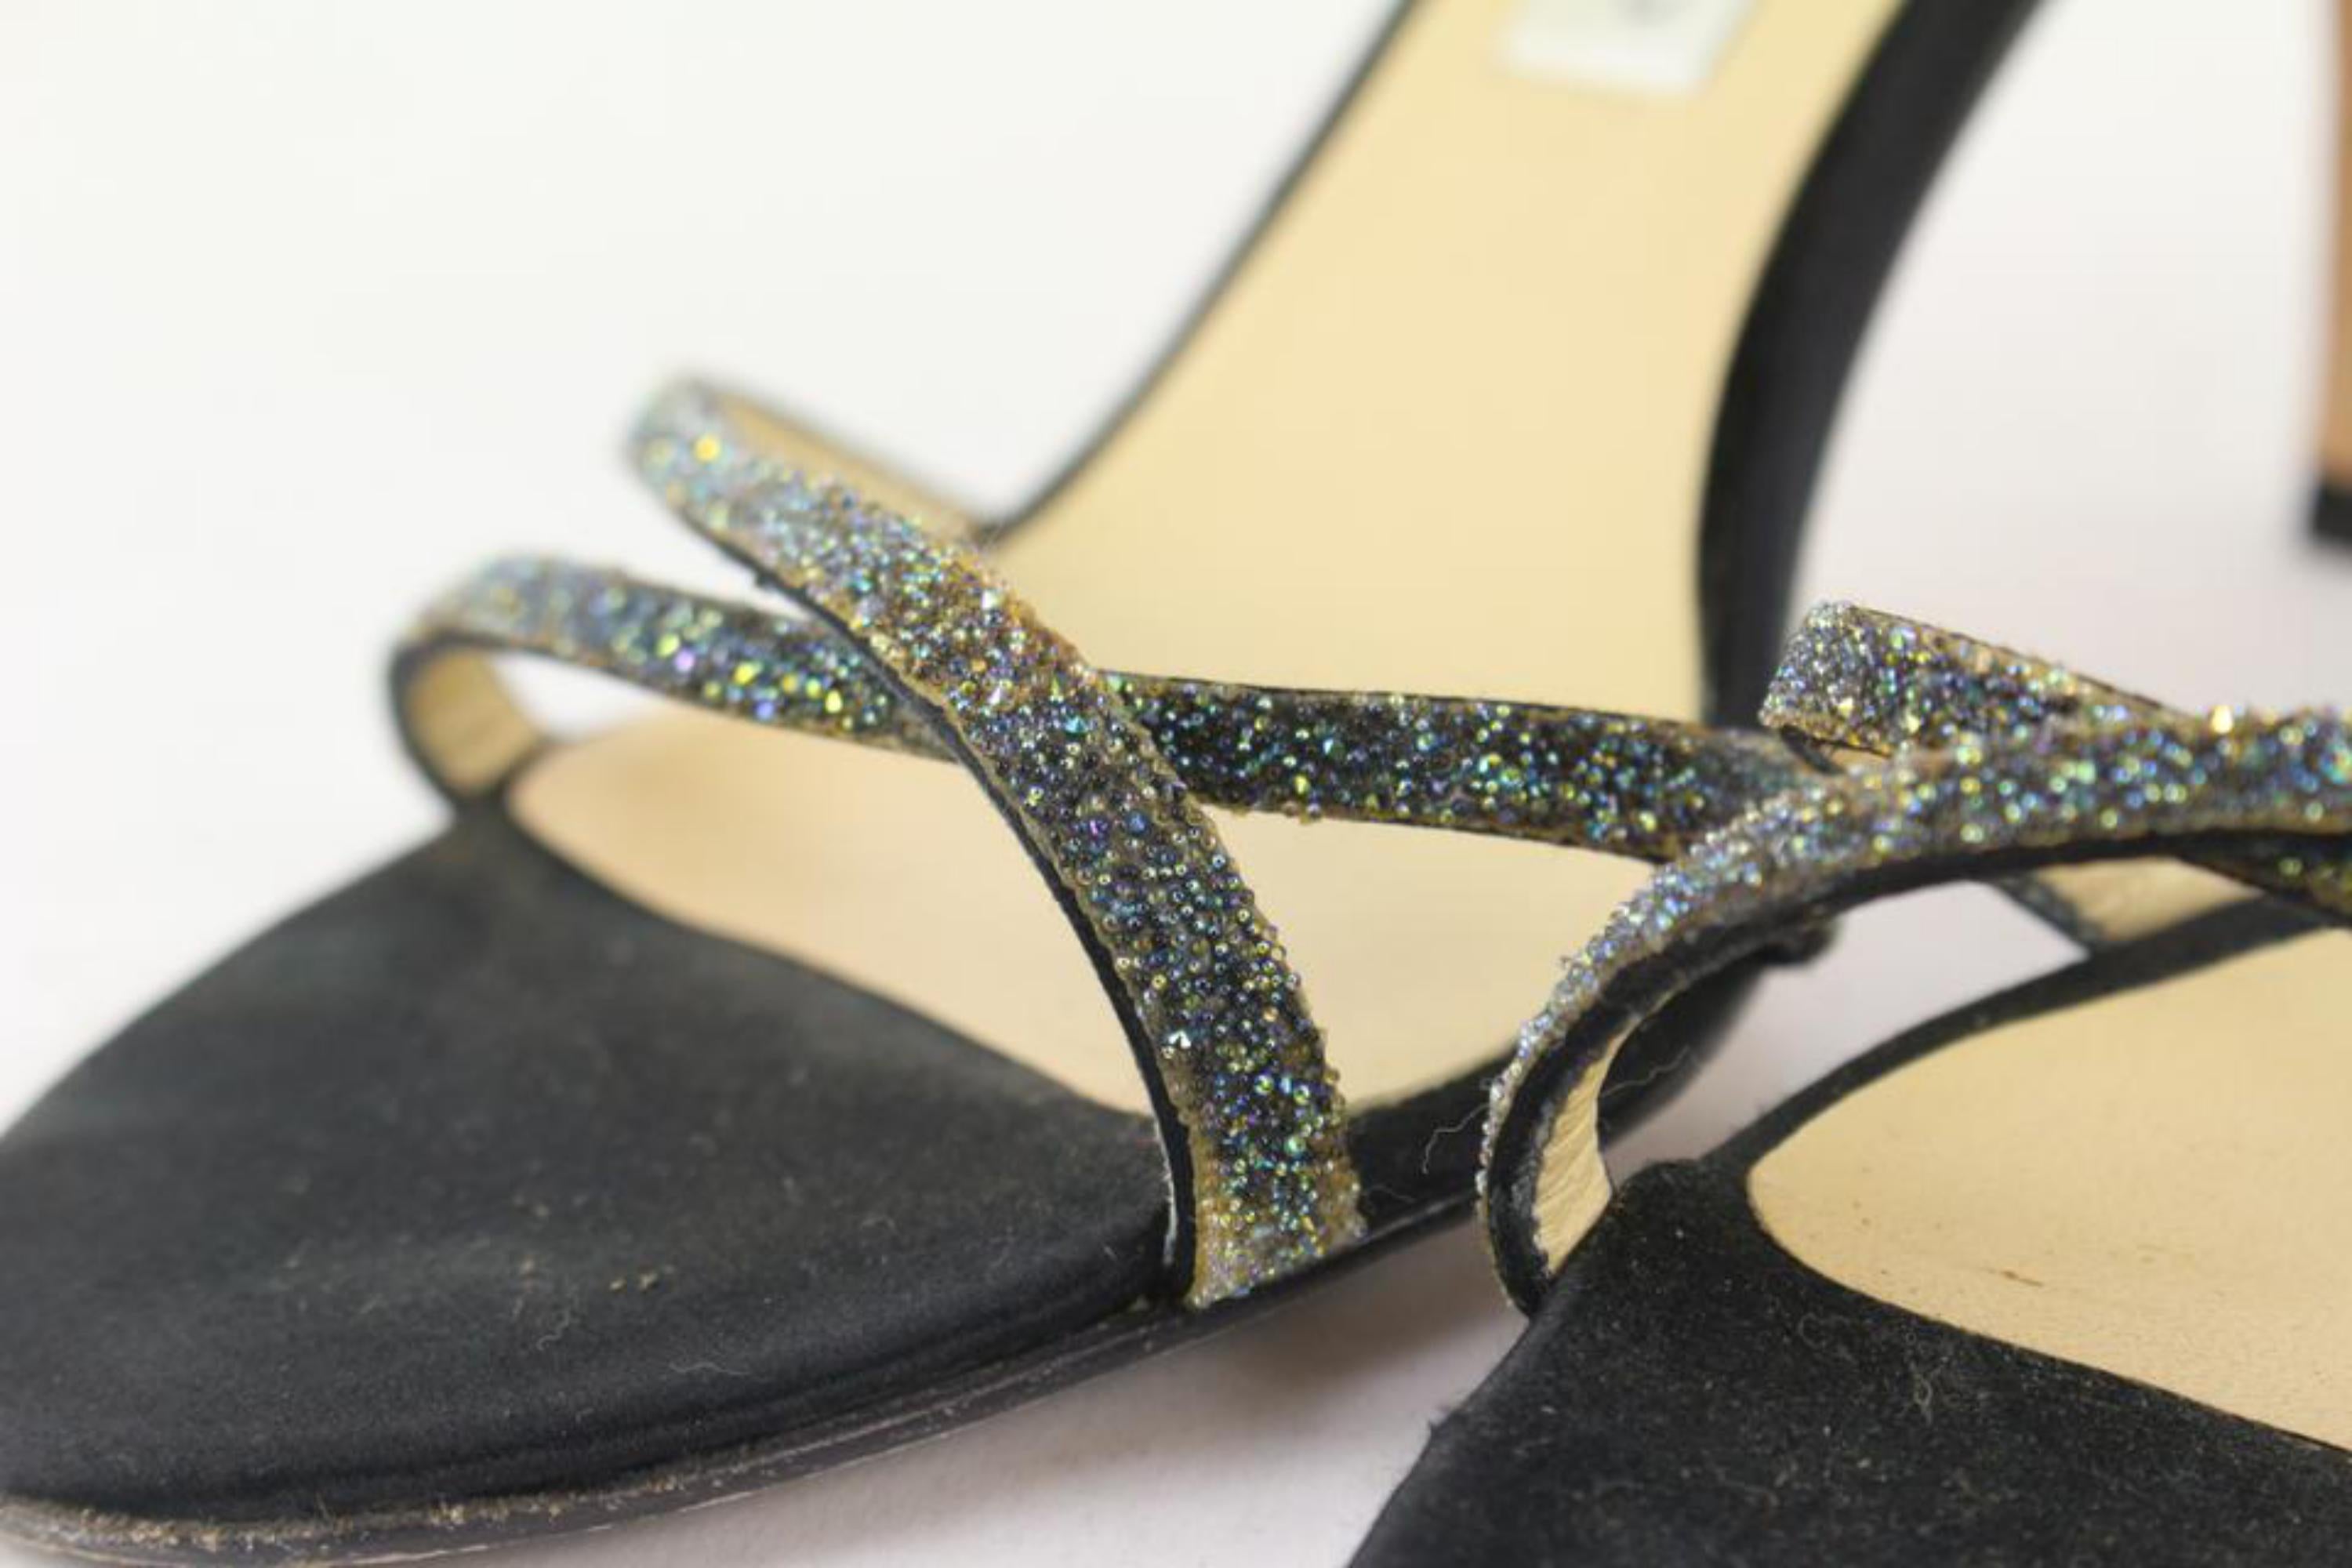 Jimmy Choo Women's 38.5 Black Satin Glitter Stone Strappy Heels 1116jc50
Made In: Italy
Measurements: Length:  9.5